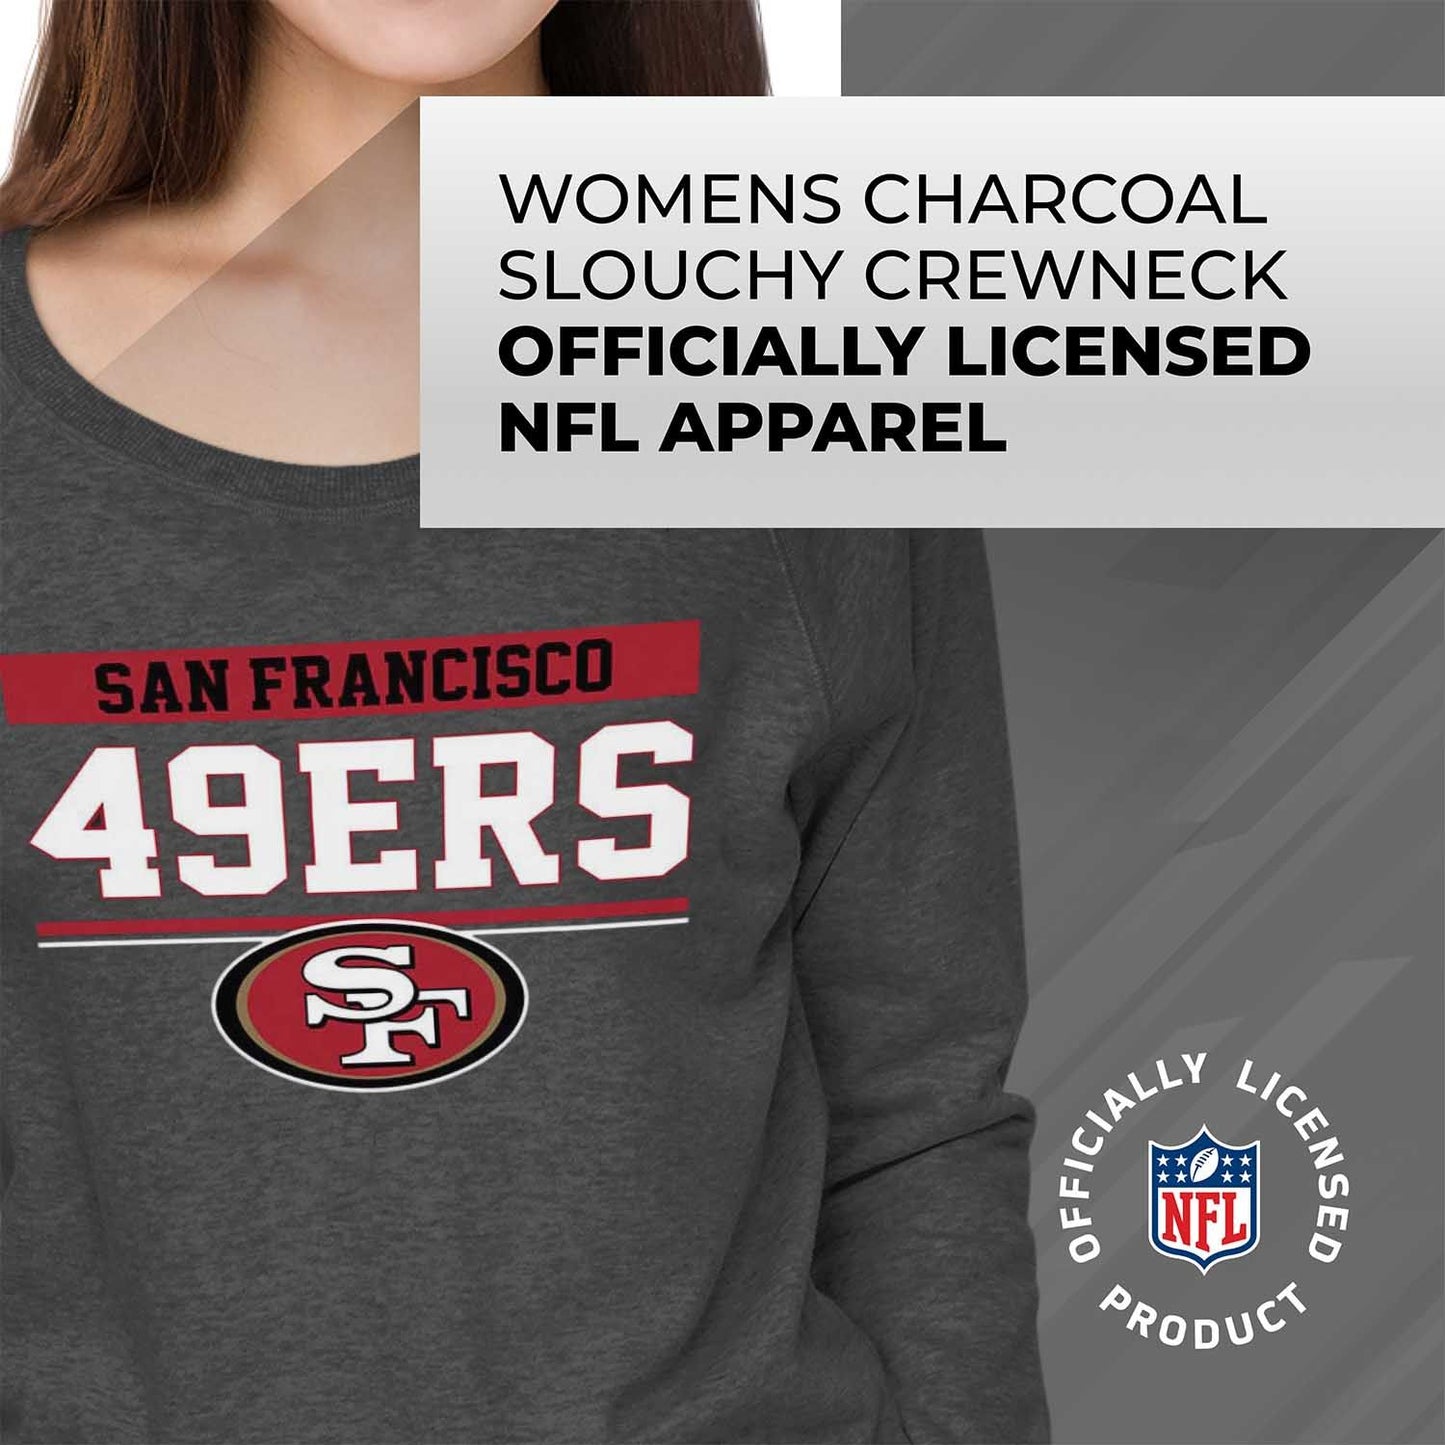 San Francisco 49ers NFL Womens Charcoal Crew Neck Football Apparel - Charcoal